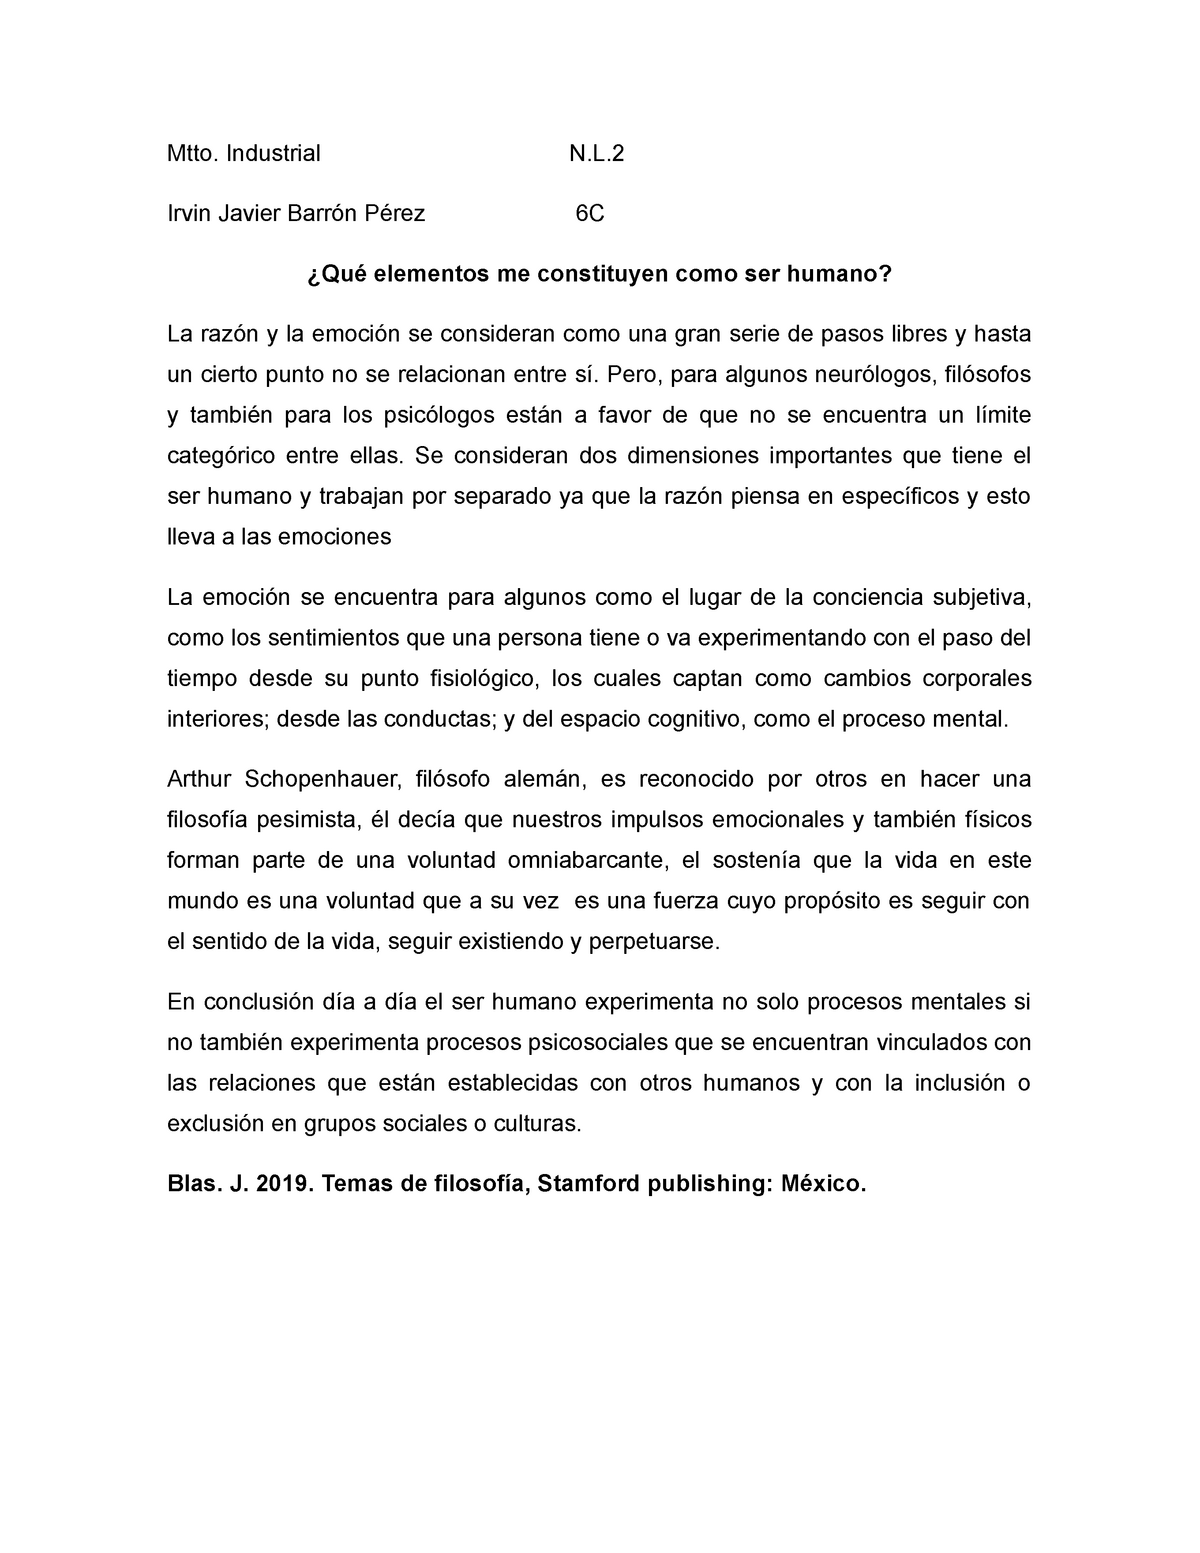 IJBP 6C 02 - Grade: 8.5 - Irvin Javier Barrón Pérez 6C ¿Qué elementos ...